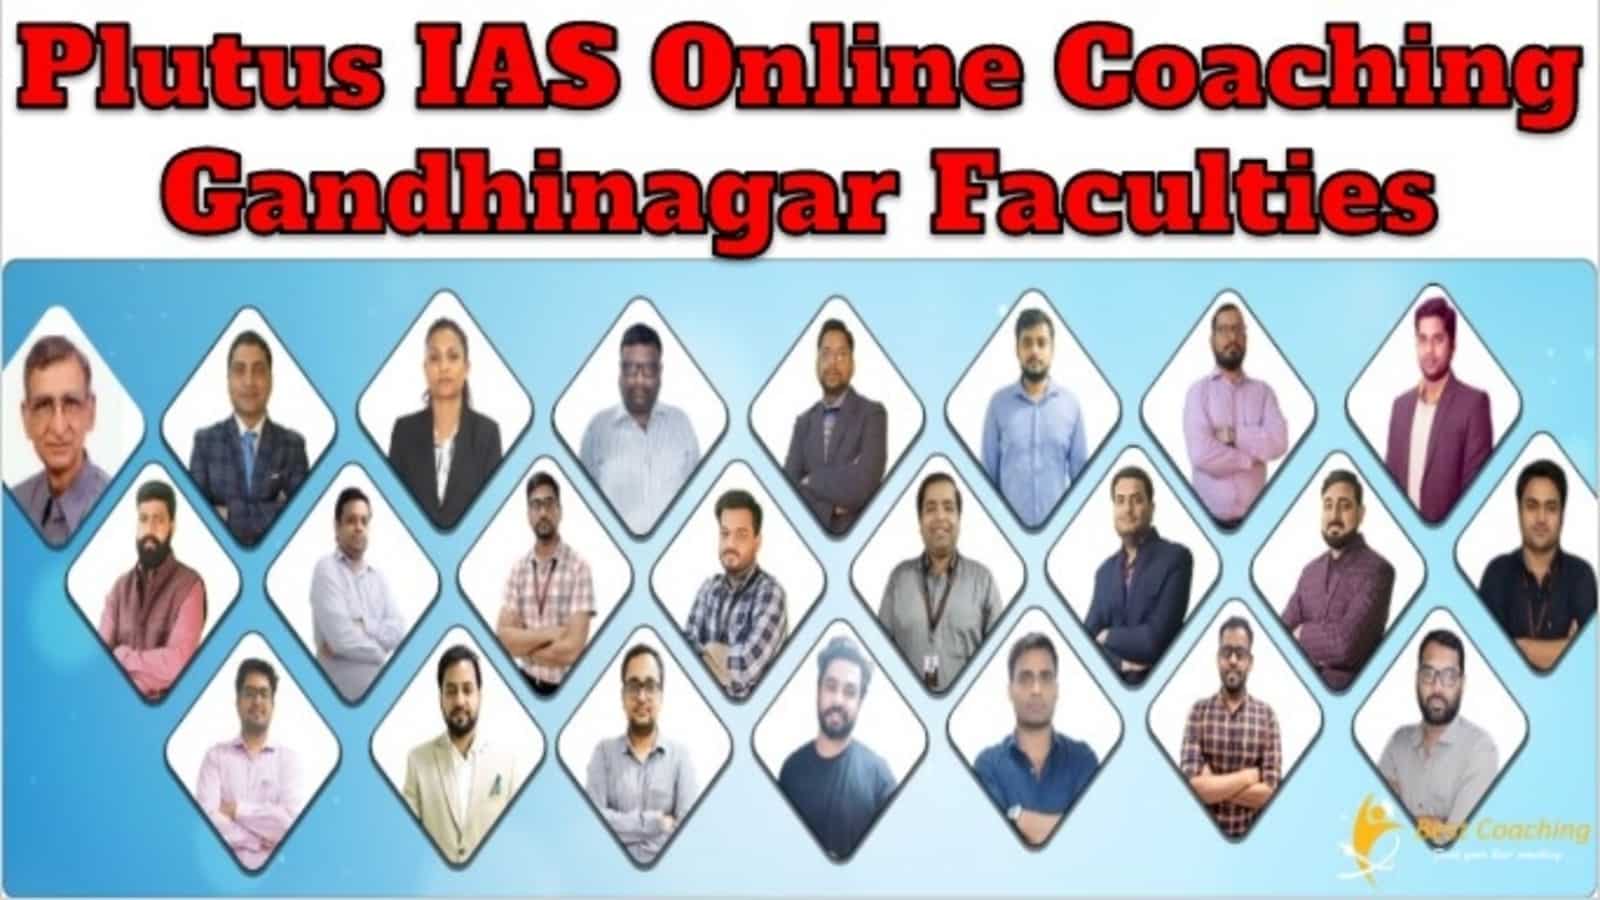 Plutus IAS Online Coaching Gandhinagar Faculties